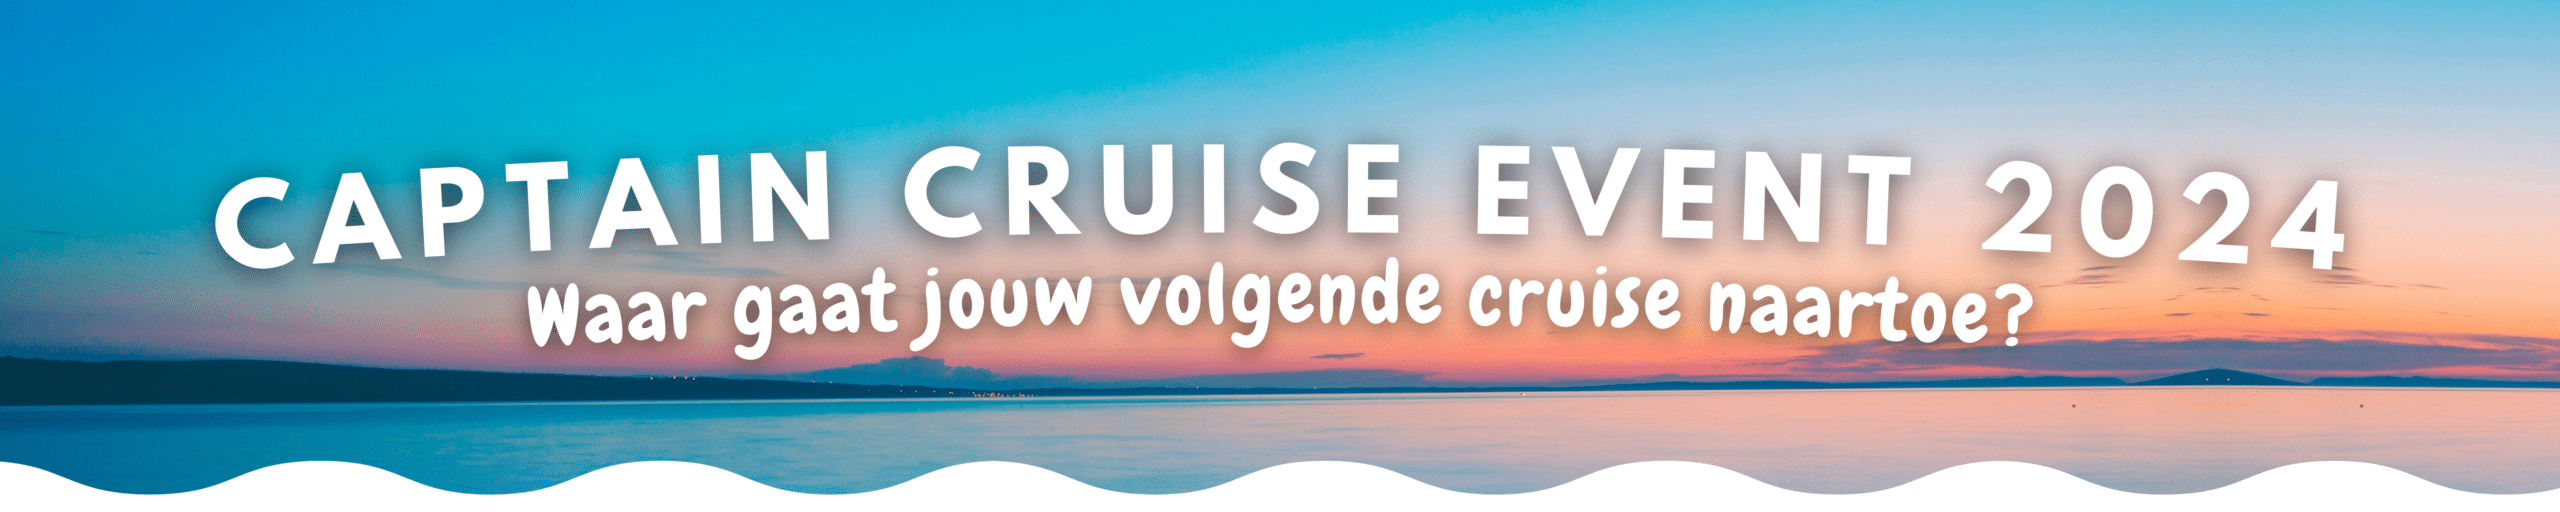 Captain Cruise Event 2024 - Banner - Cruisevakantie